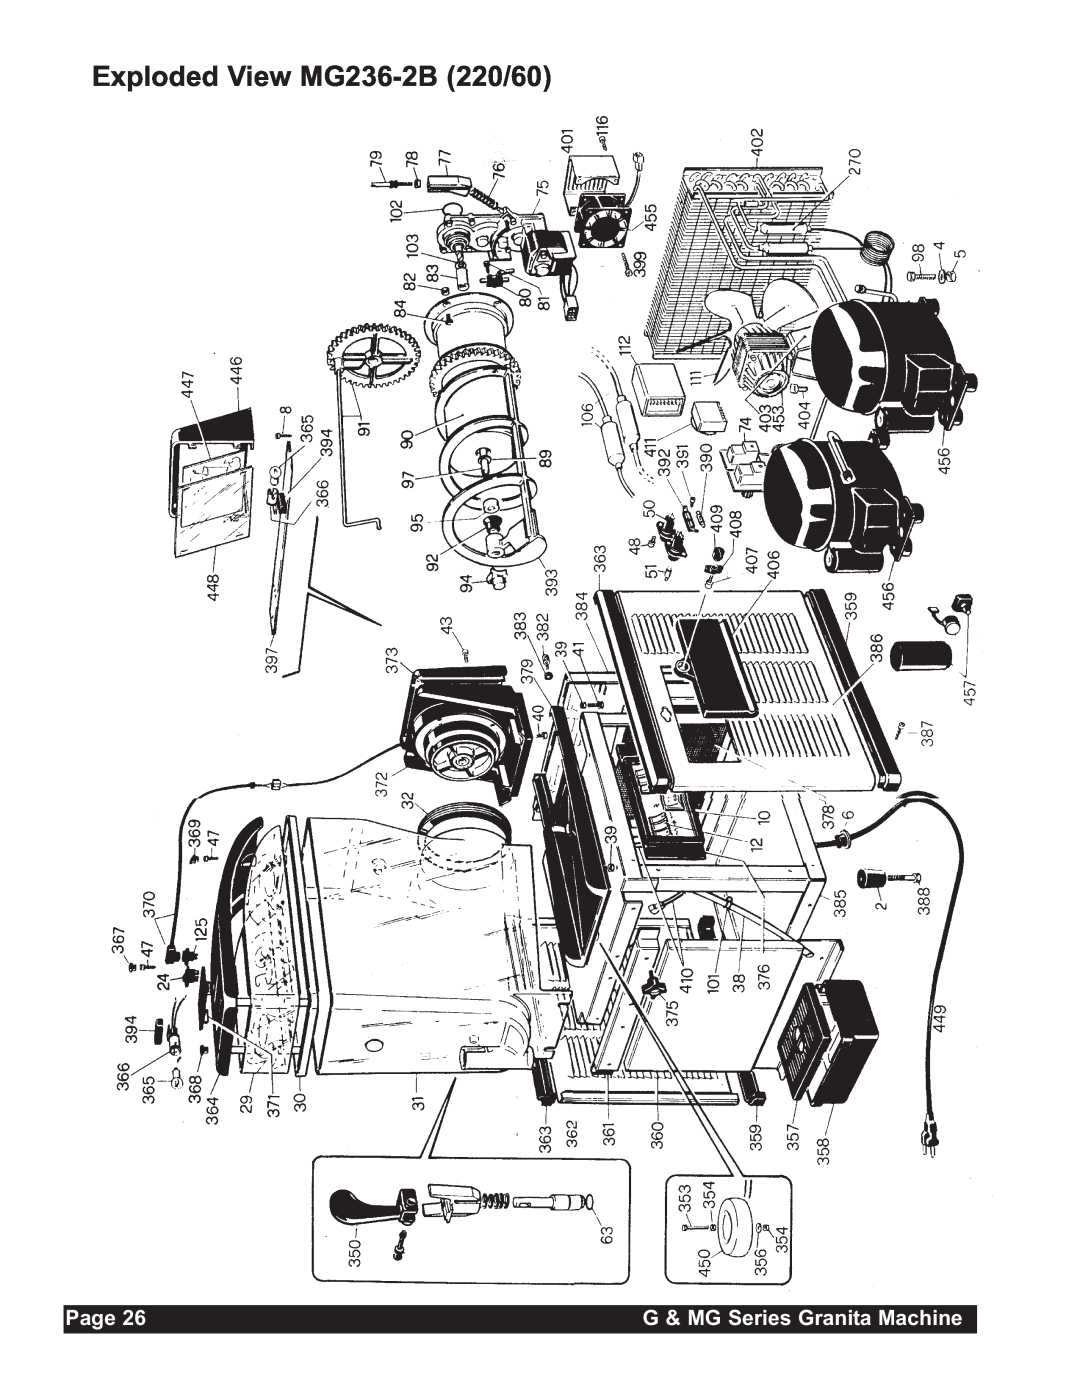 Grindmaster MG235-2B, MG23-2B instruction manual Exploded View MG236-2B220/60, Page, G & MG Series Granita Machine 